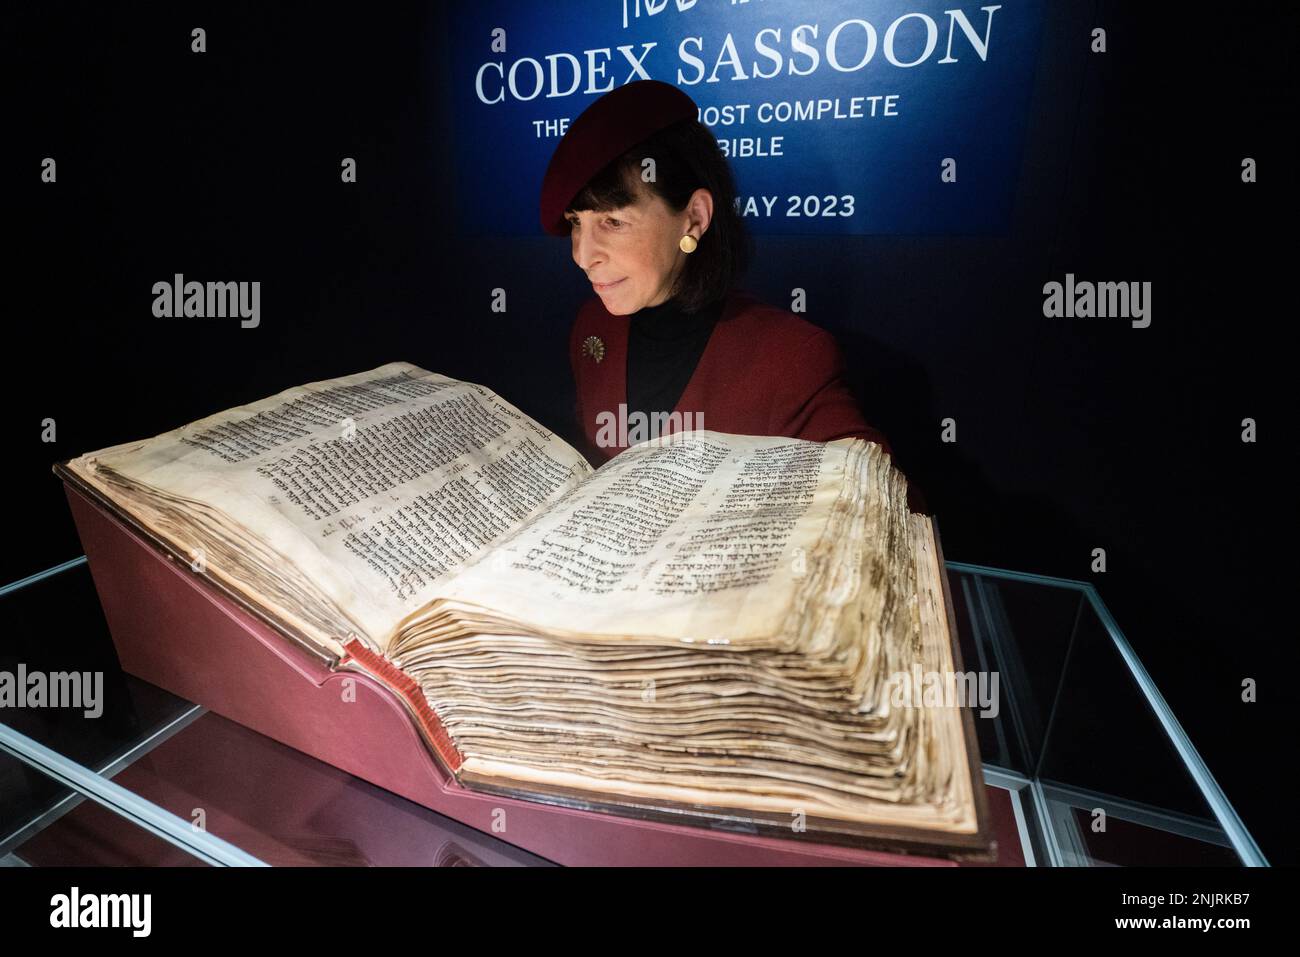 Codex Damas